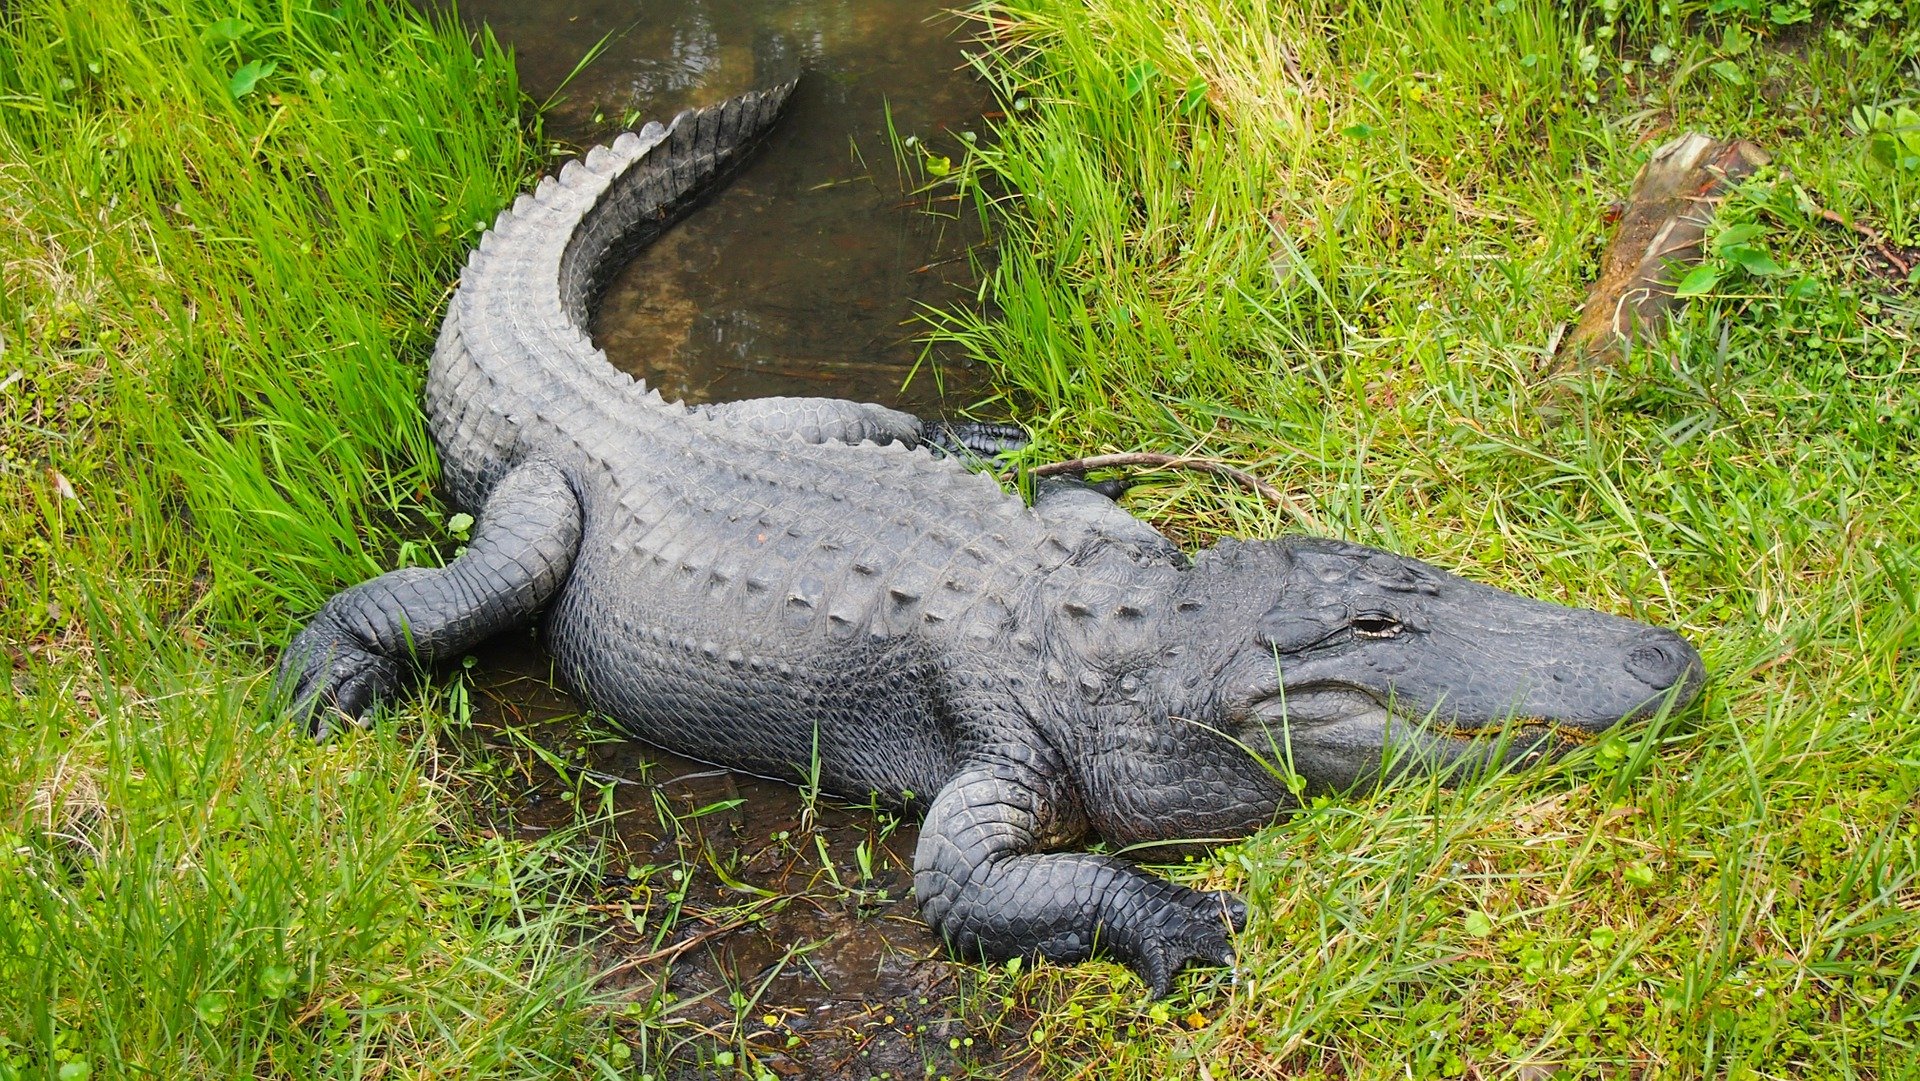 Alligator in tall grass. | Source: Pixabay